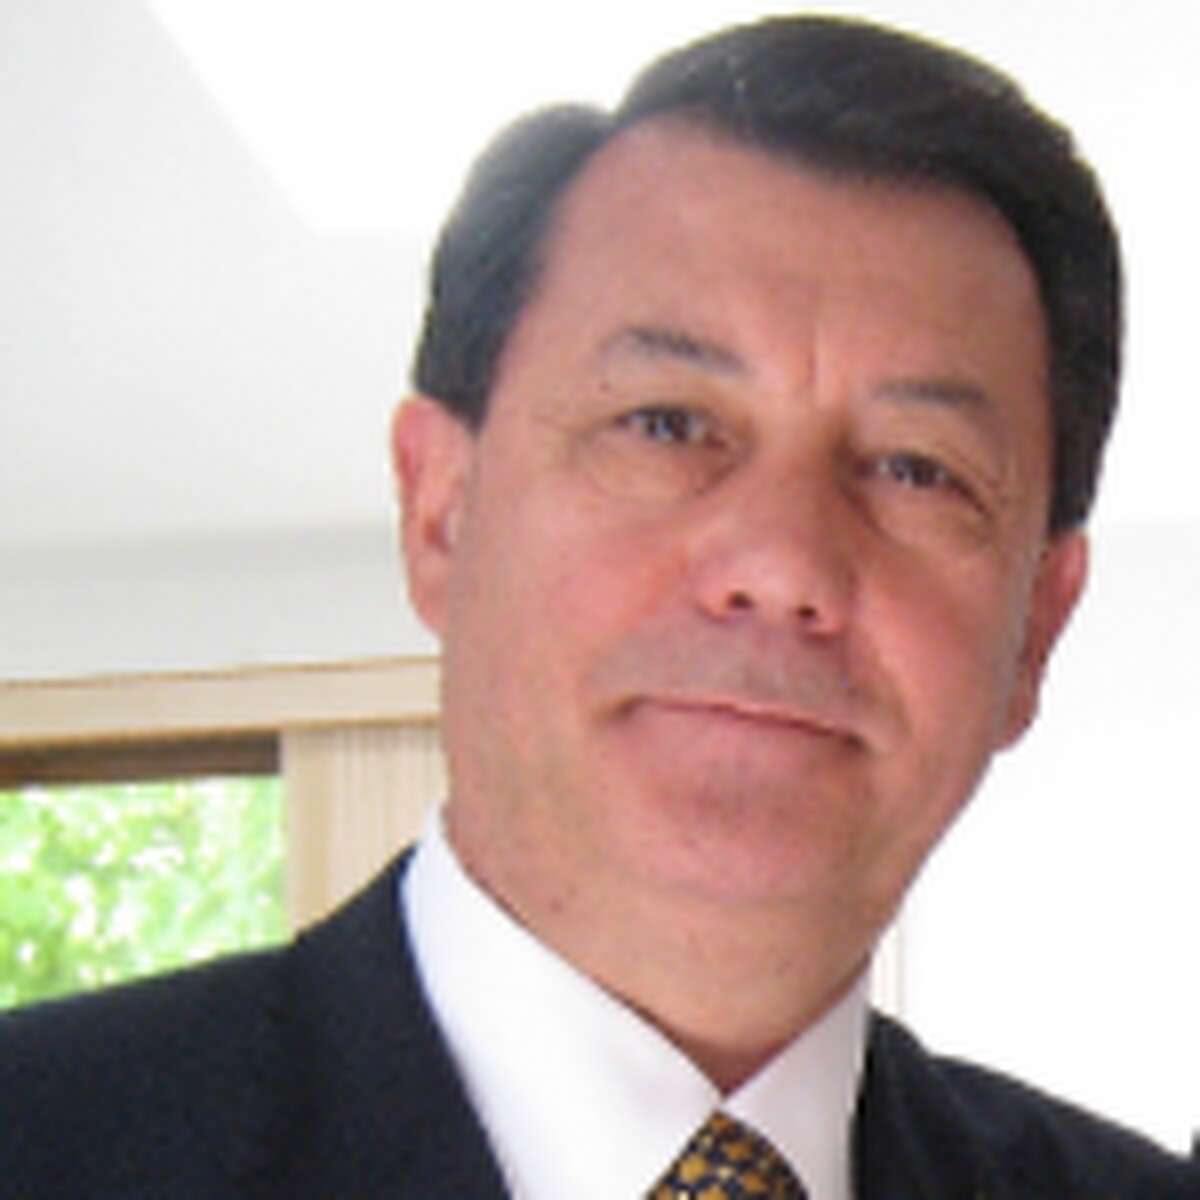 Lino Costantini